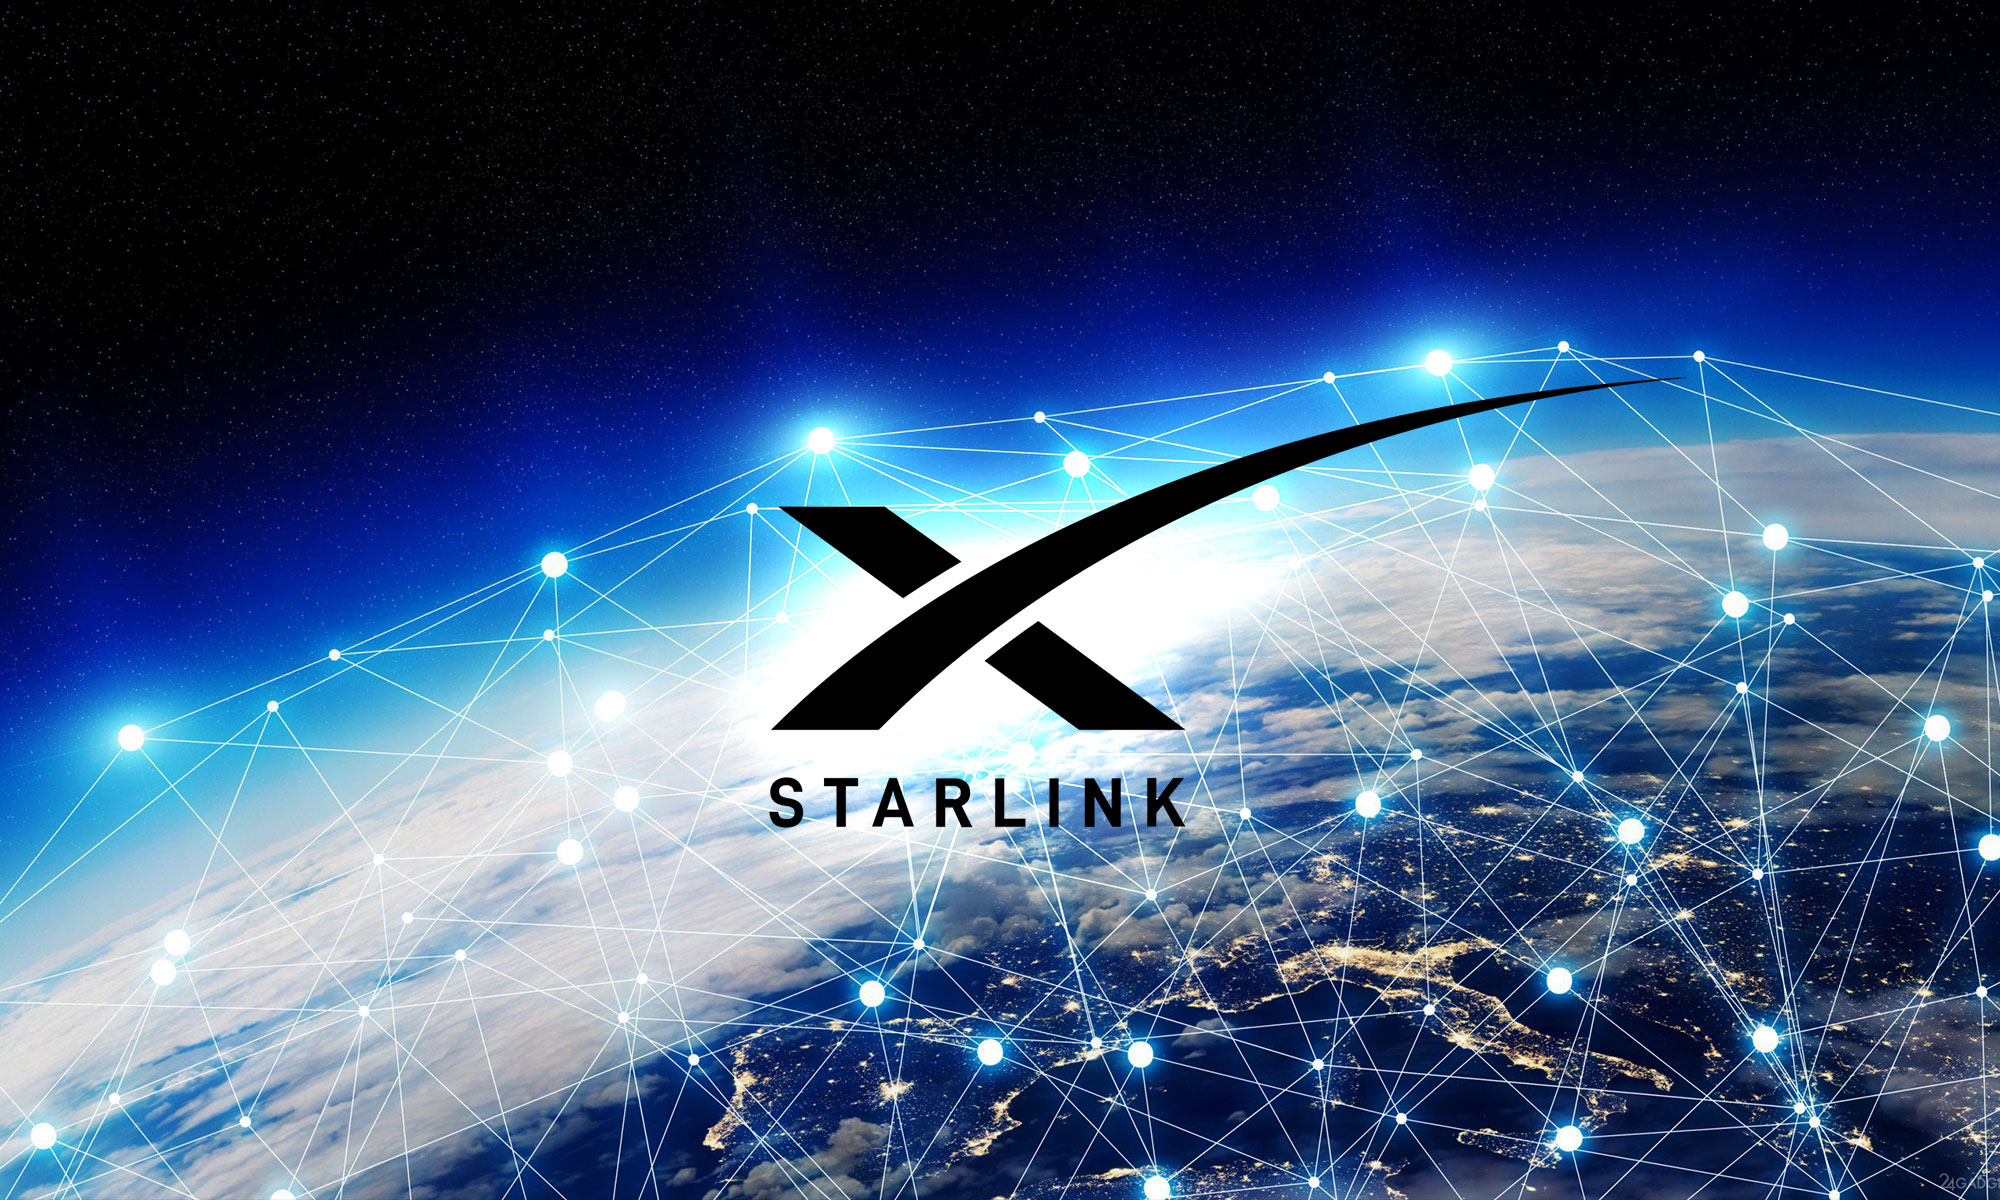 starlink-09.jpg (622 KB)